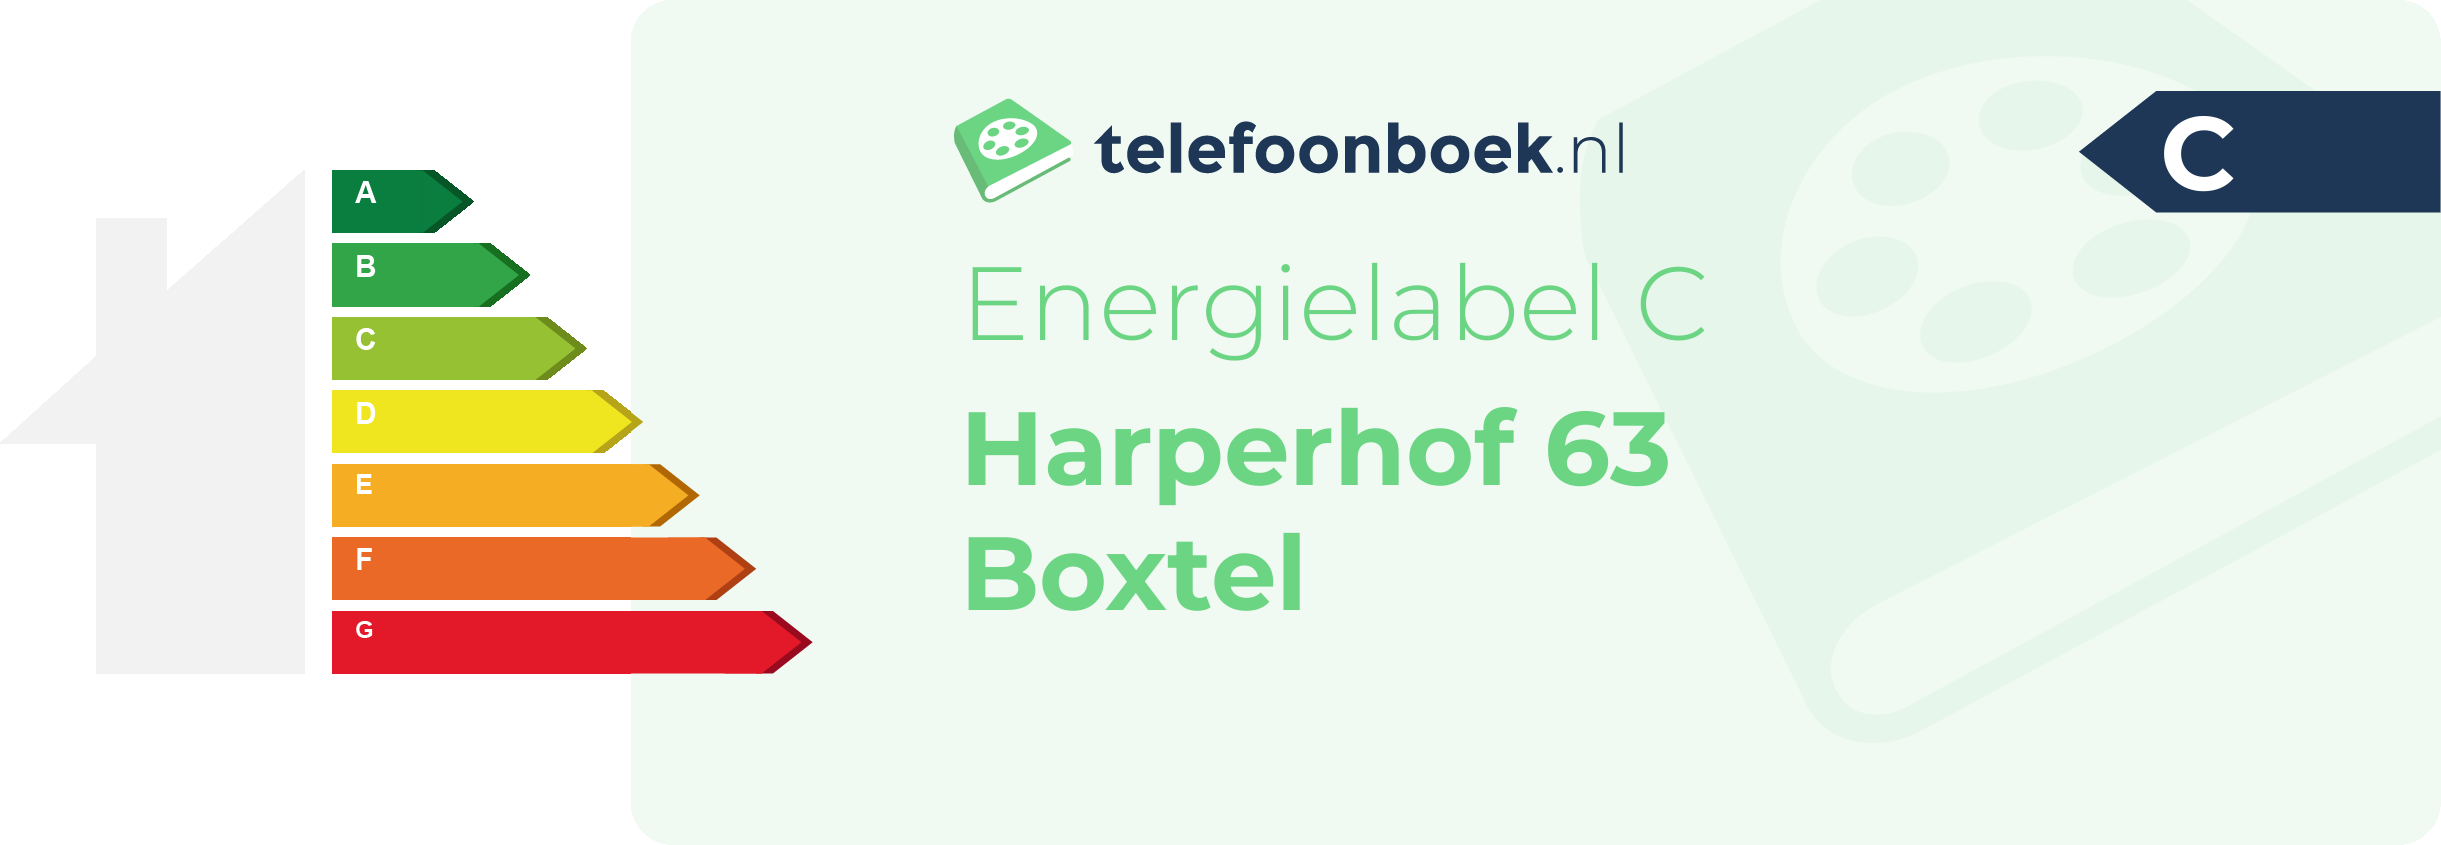 Energielabel Harperhof 63 Boxtel